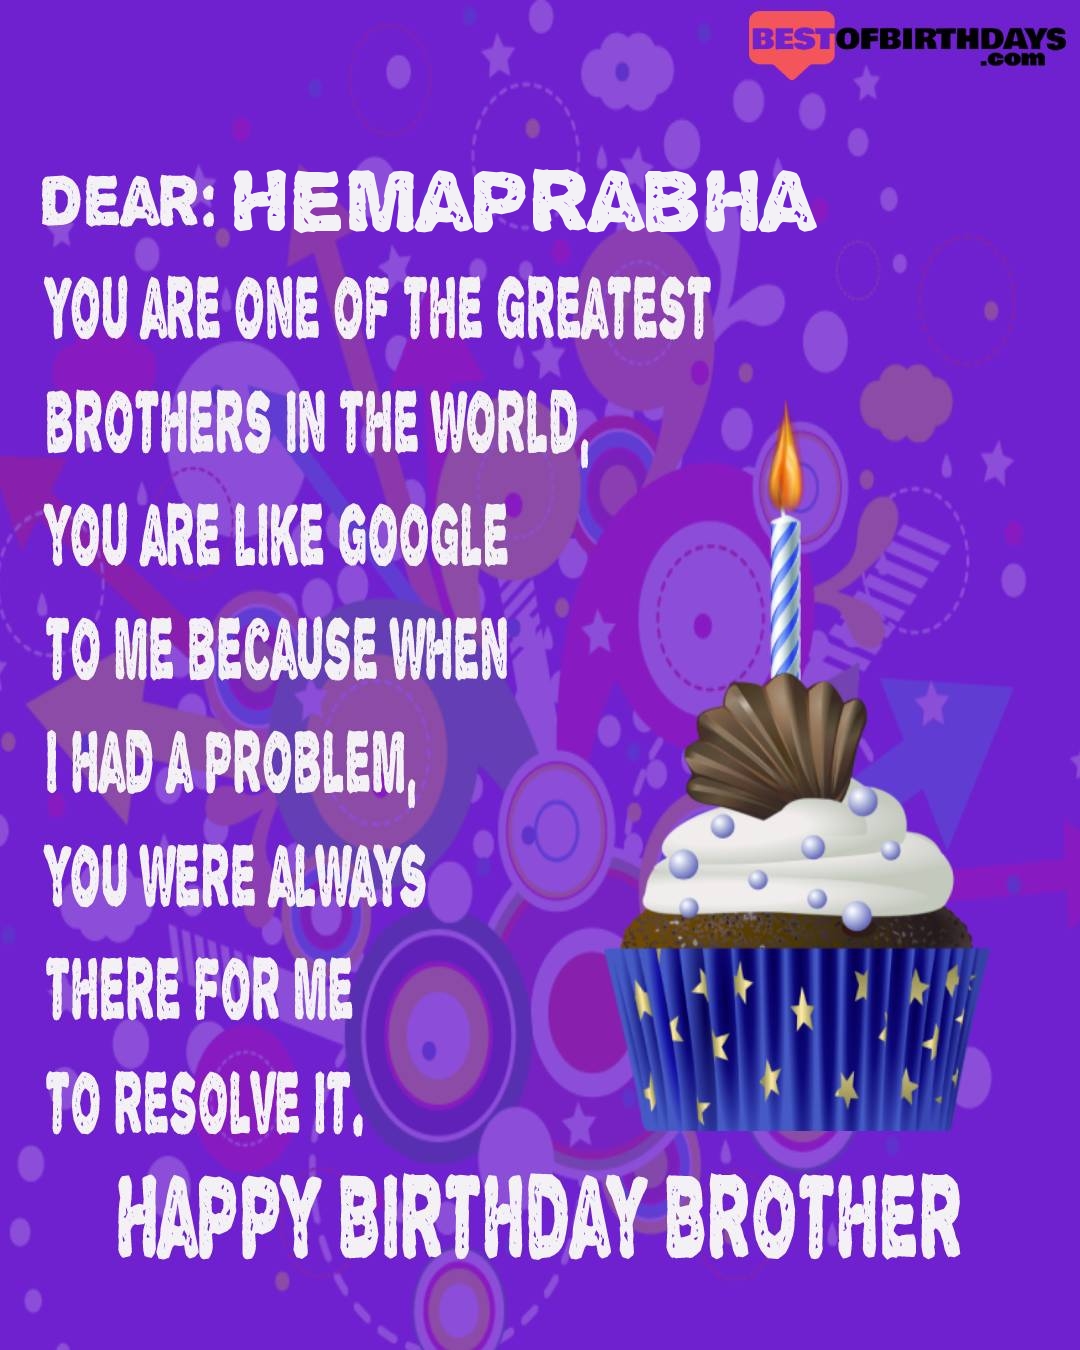 Happy birthday hemaprabha bhai brother bro